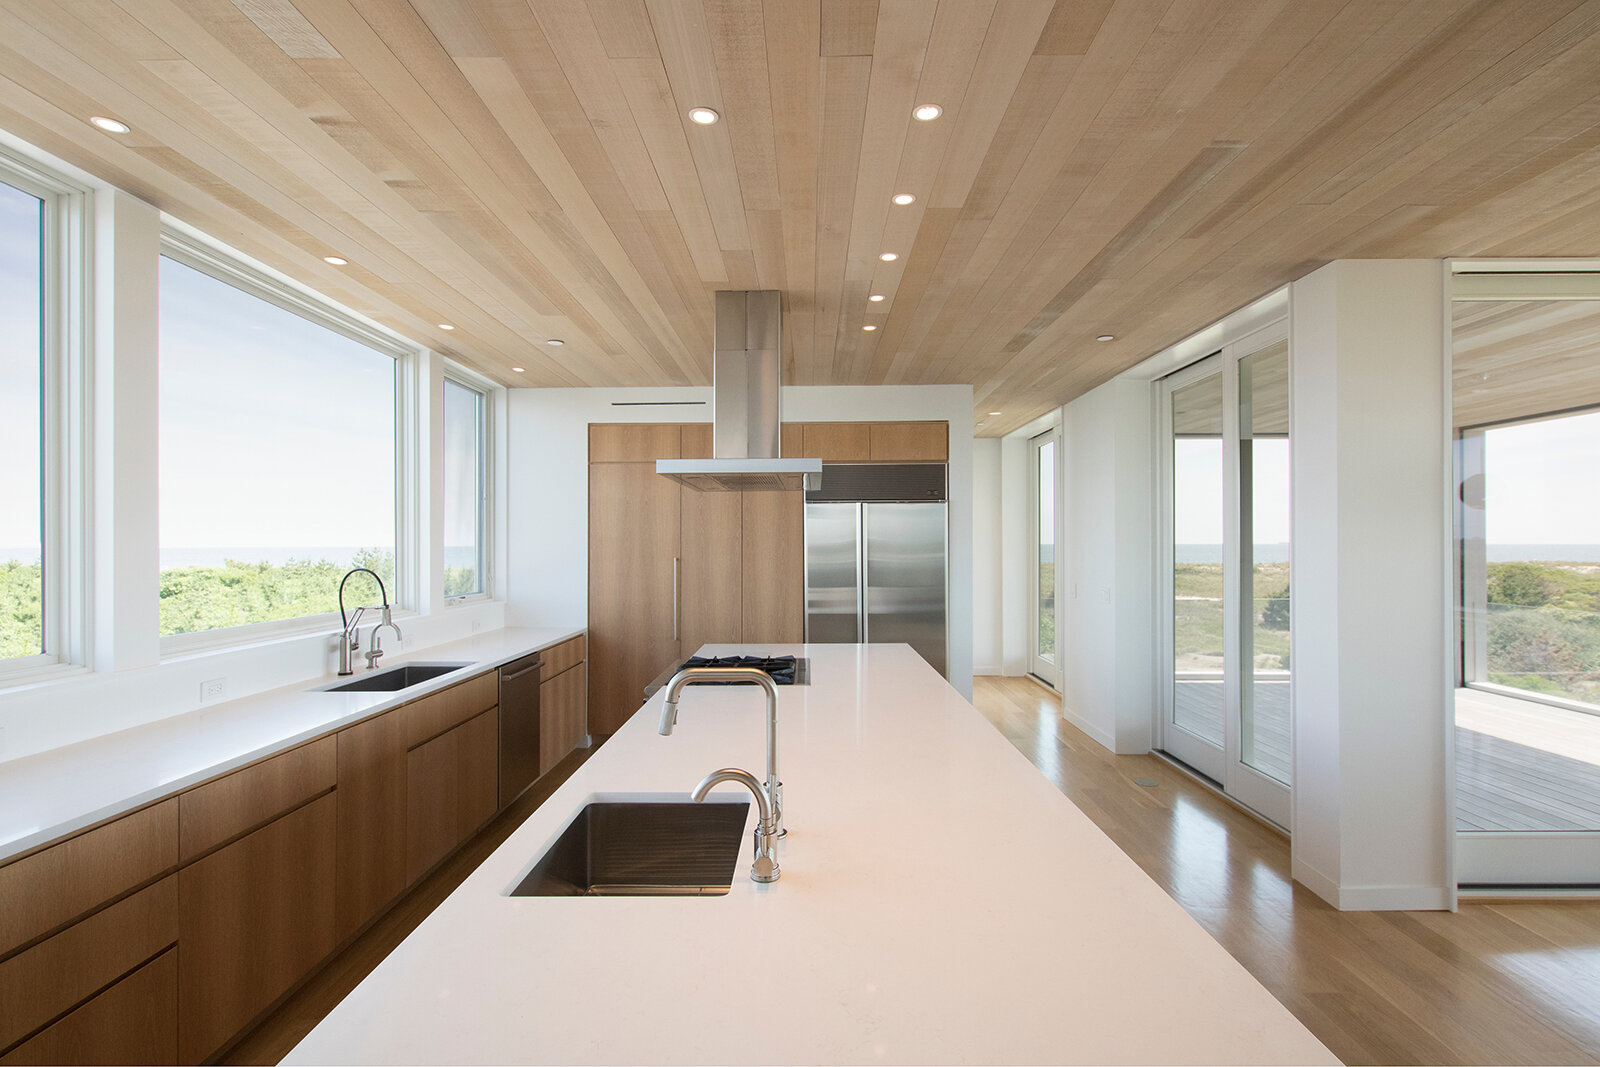 15-res4-resolution-4-architecture-modern-modular-house-prefab-home-lido-beach-house-2-long-island-ny-interior-kitchen-island.jpg